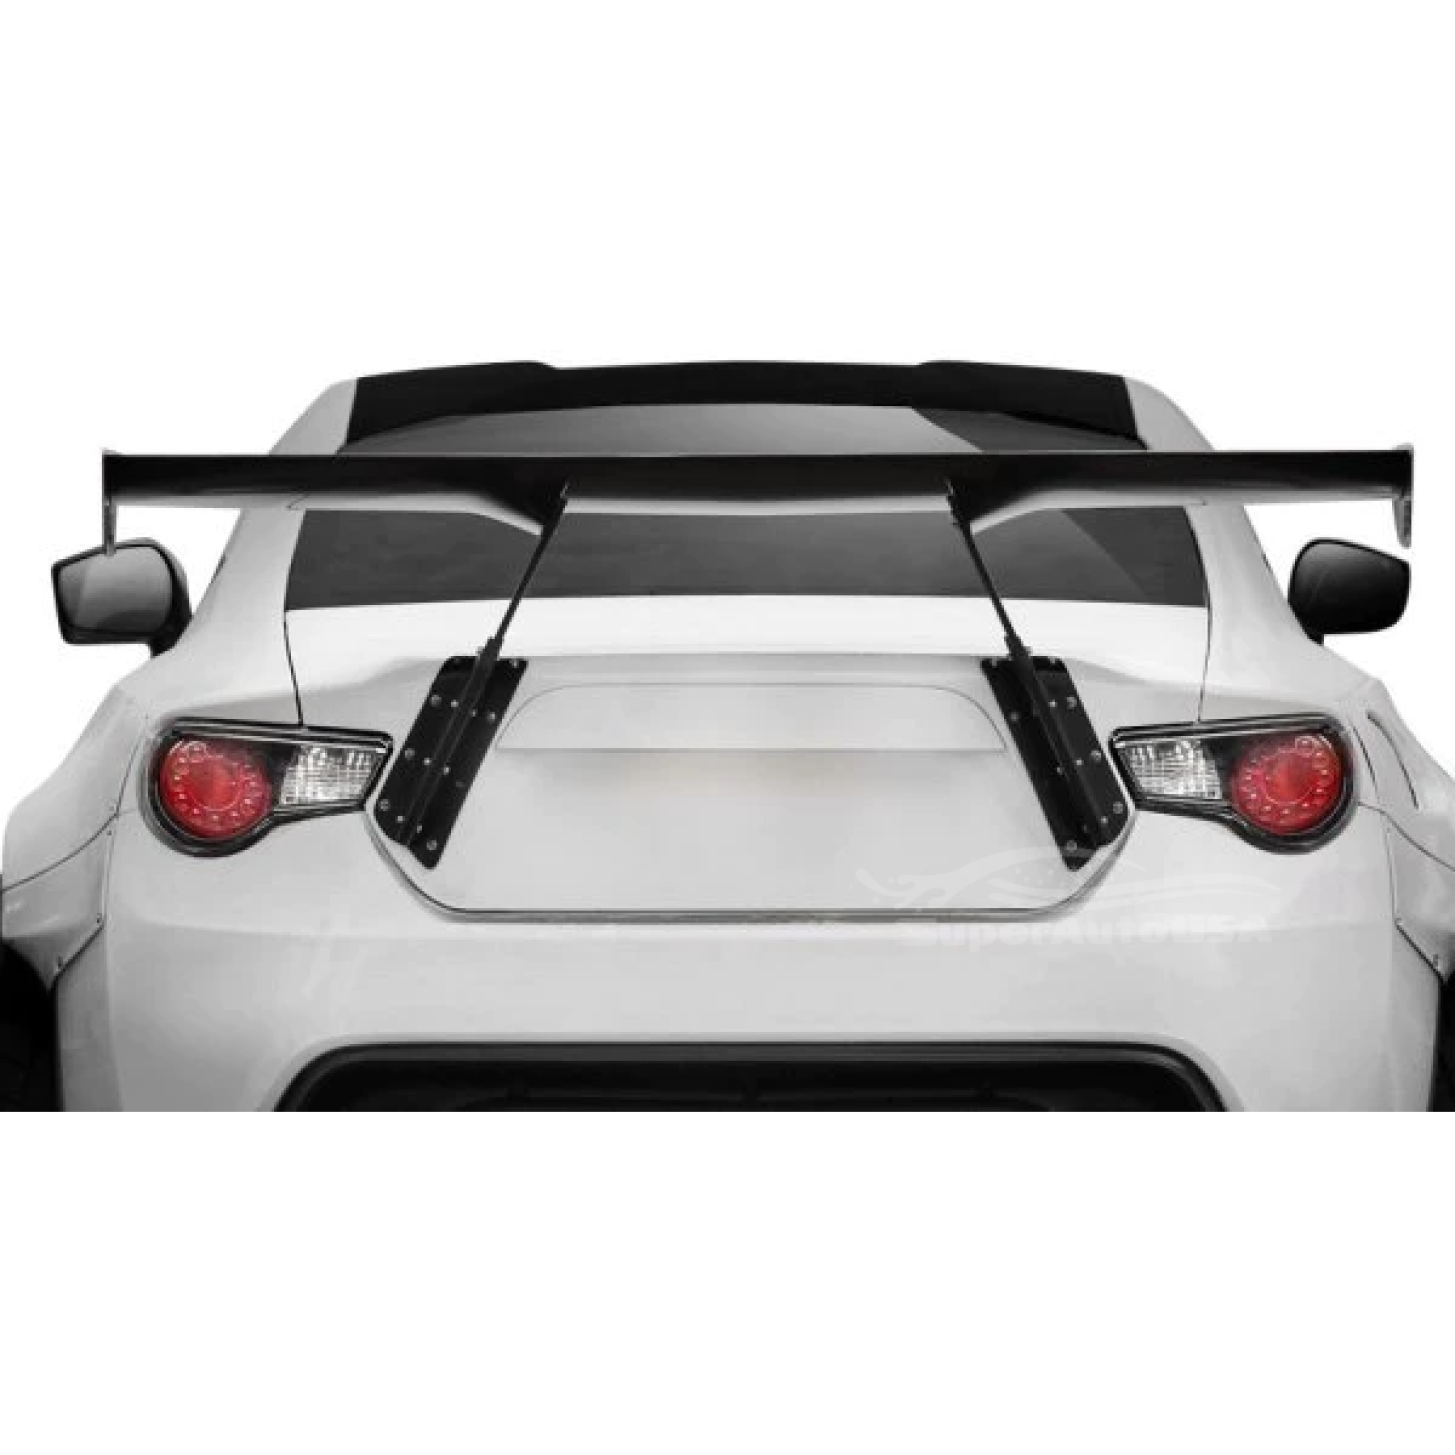 2015 Toyota GT86 Real Carbon Fiber Rear Trunk Spoiler